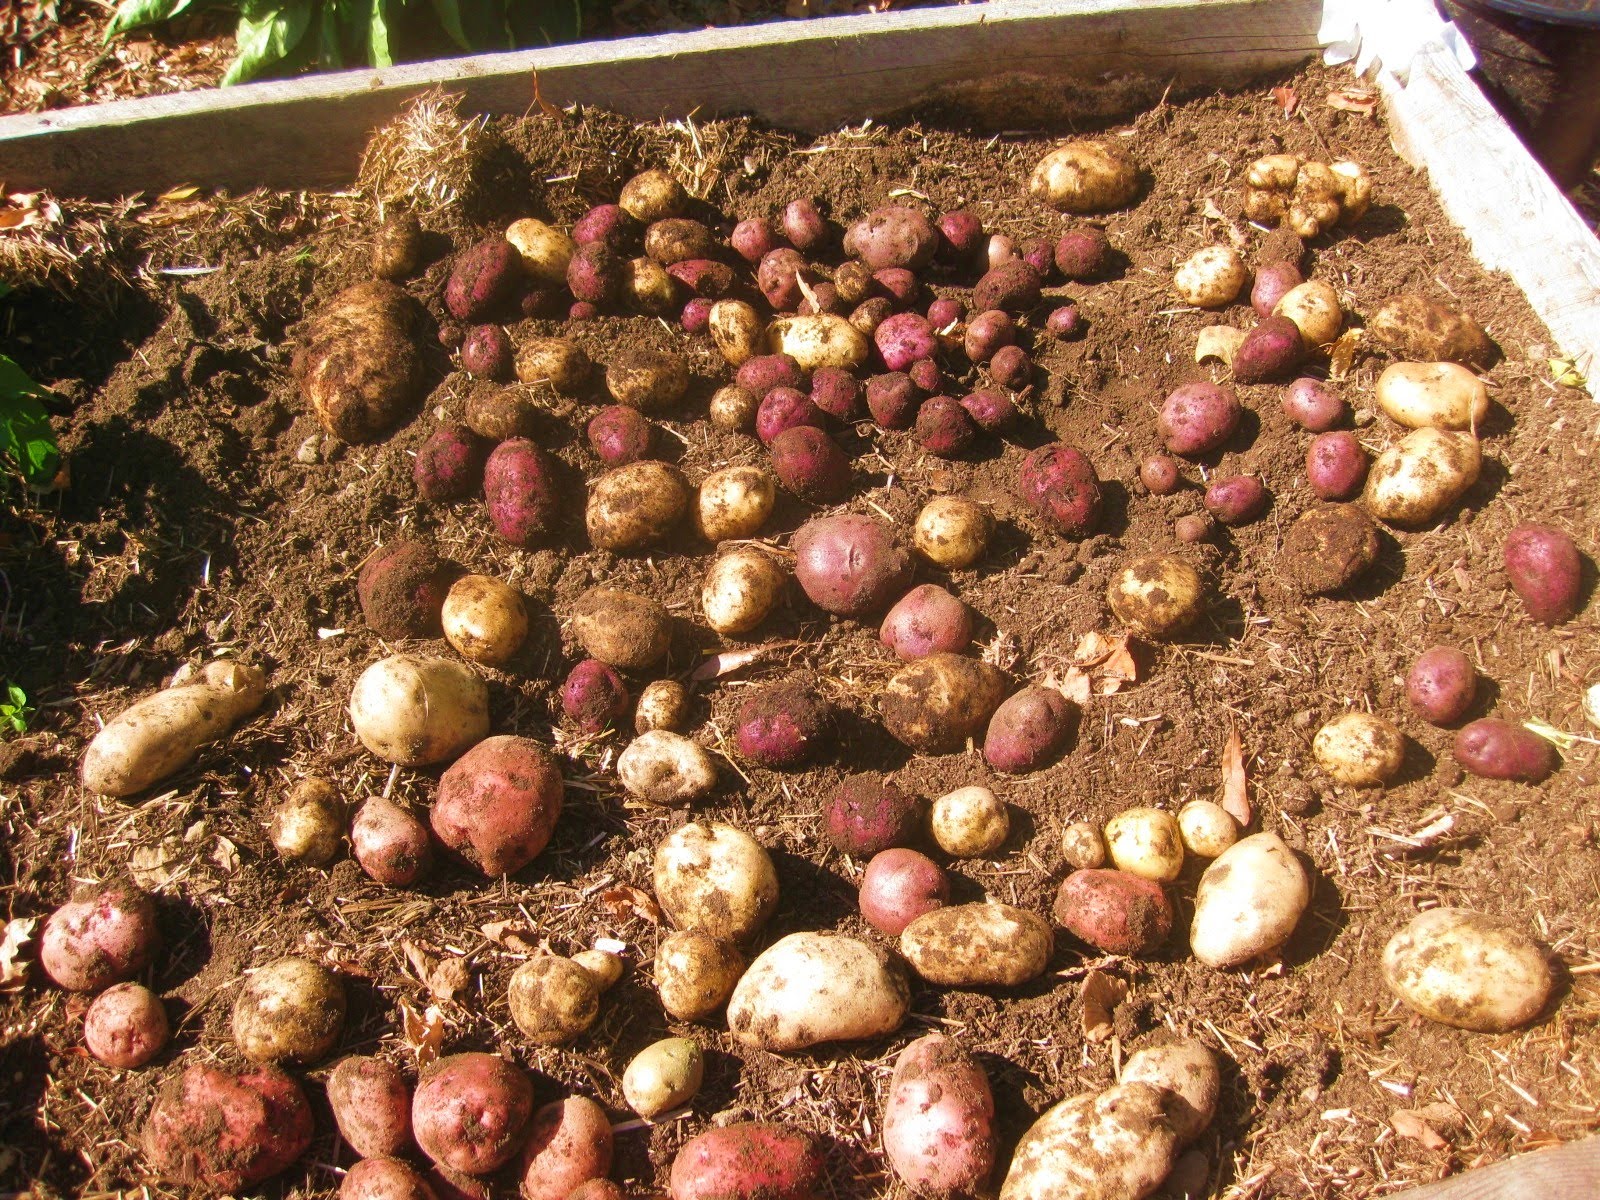 Growing Better Potatoes